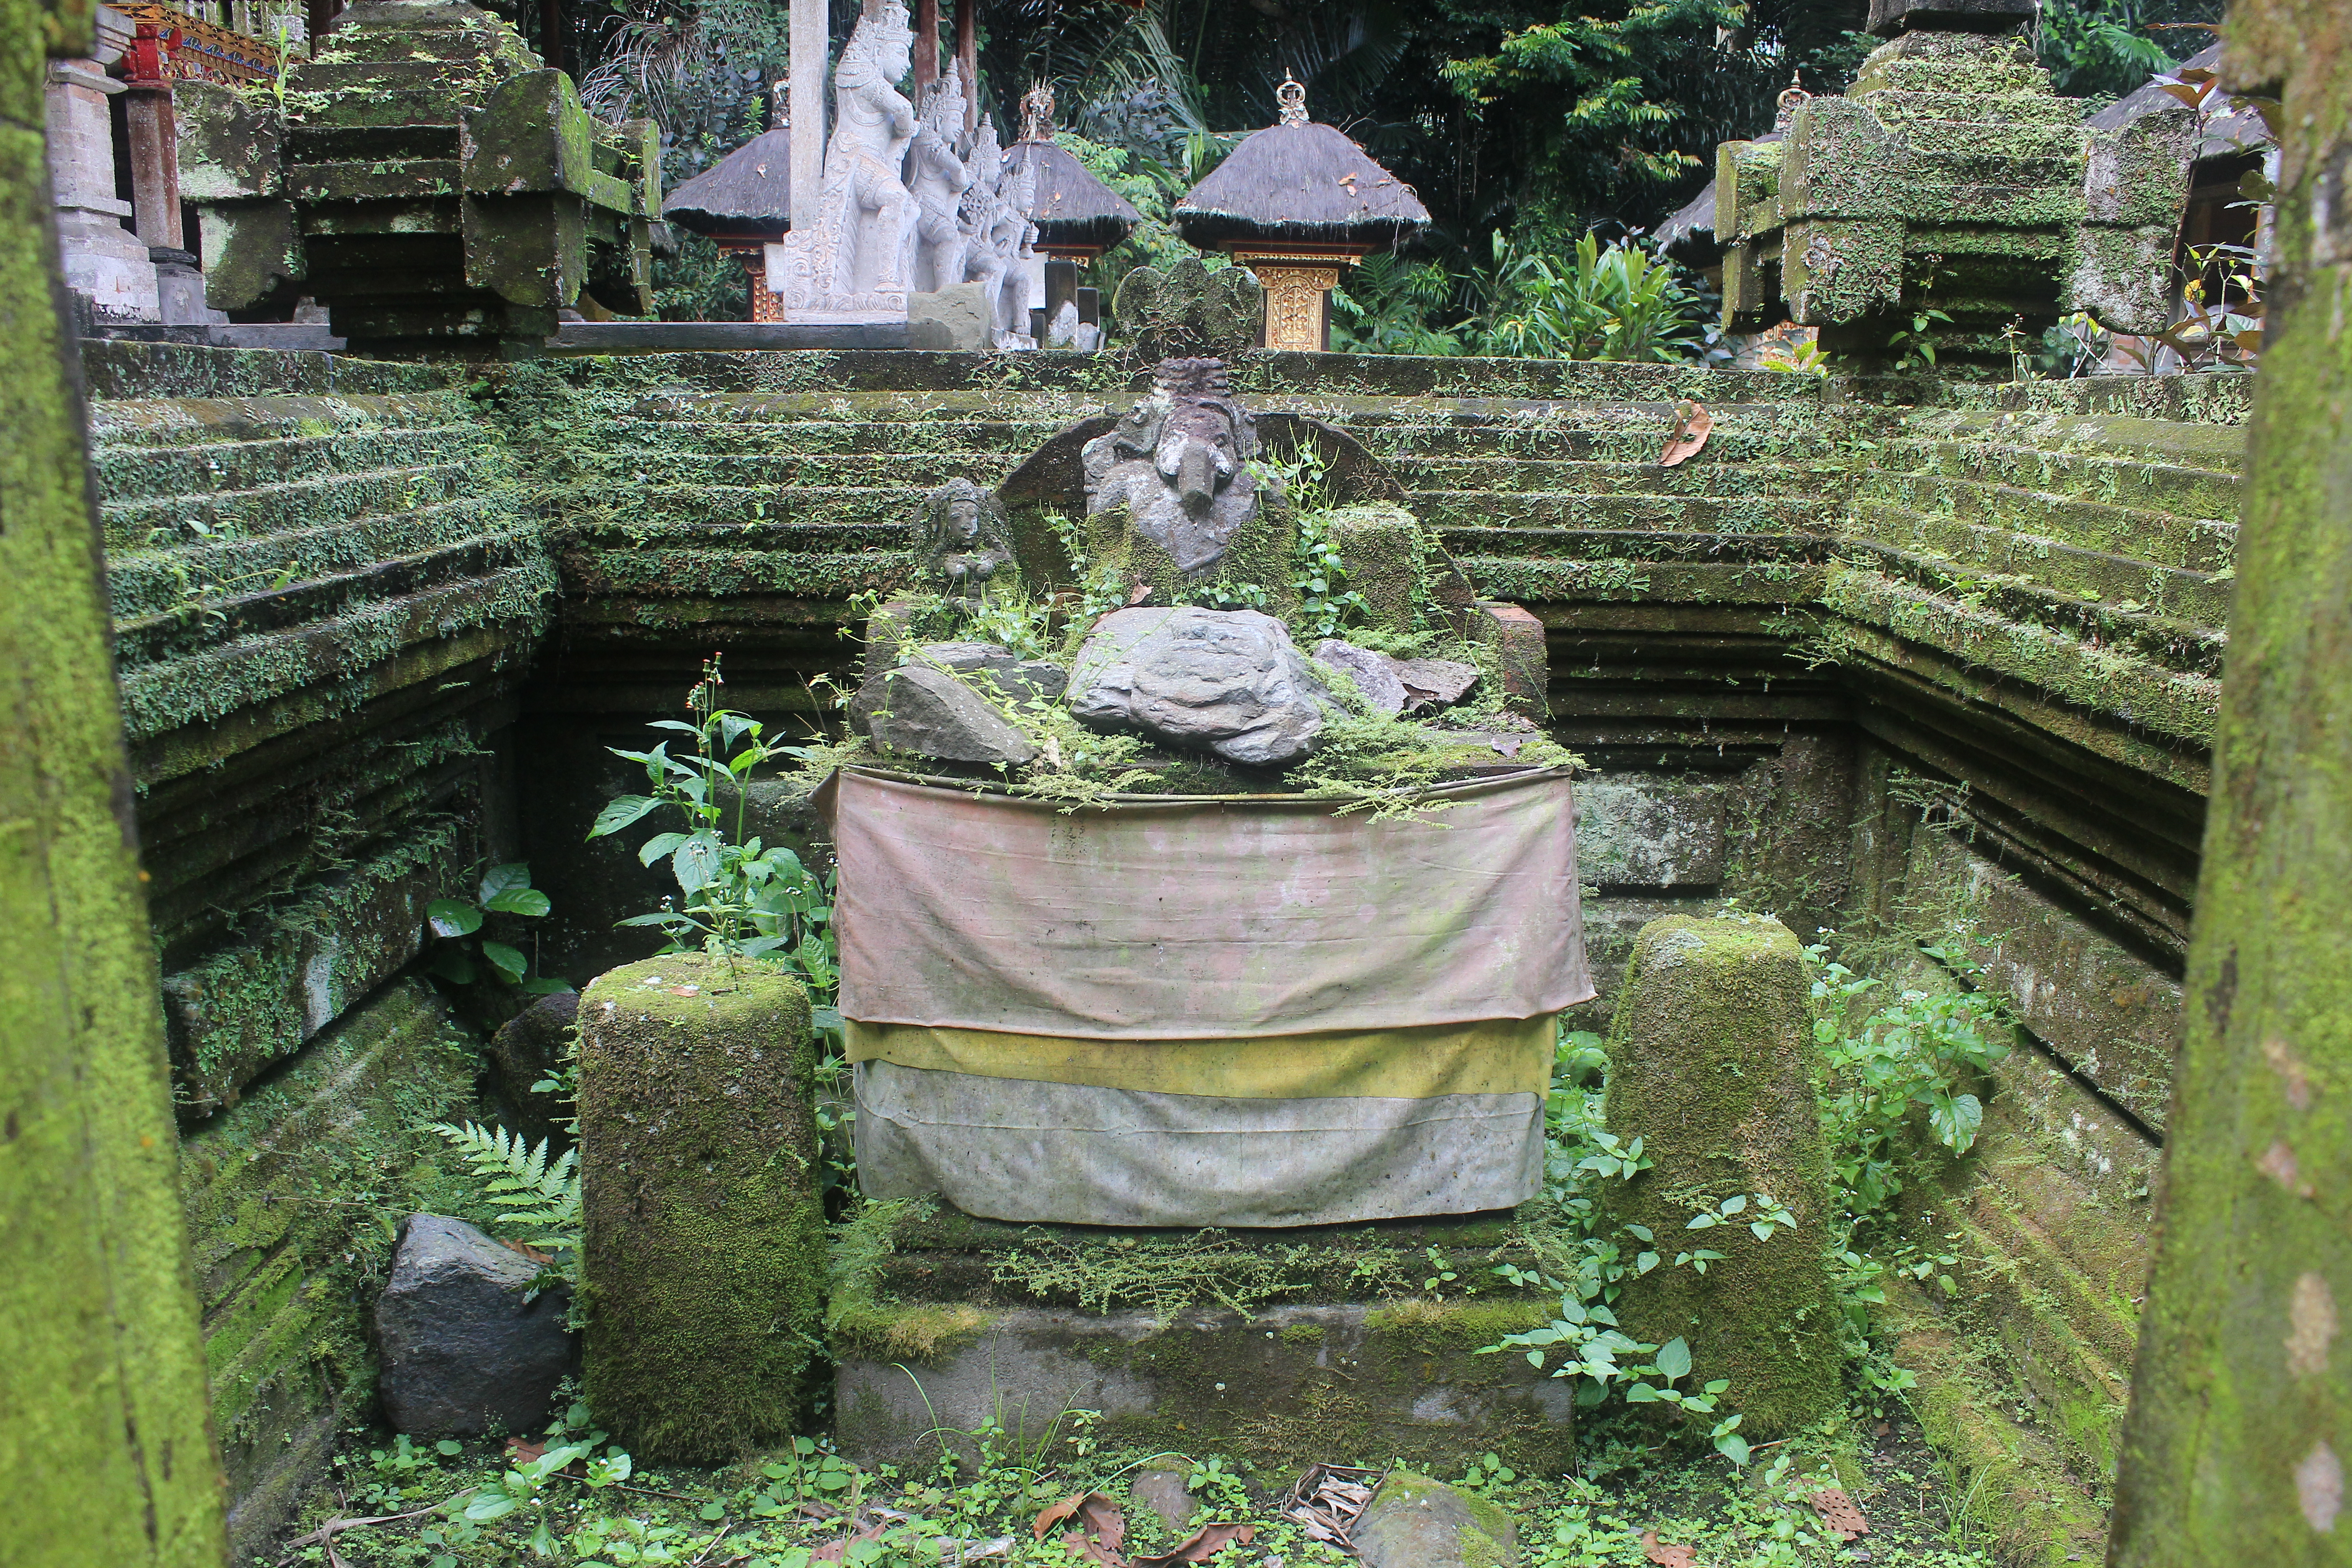 Overgrown low shrine with Ganesha